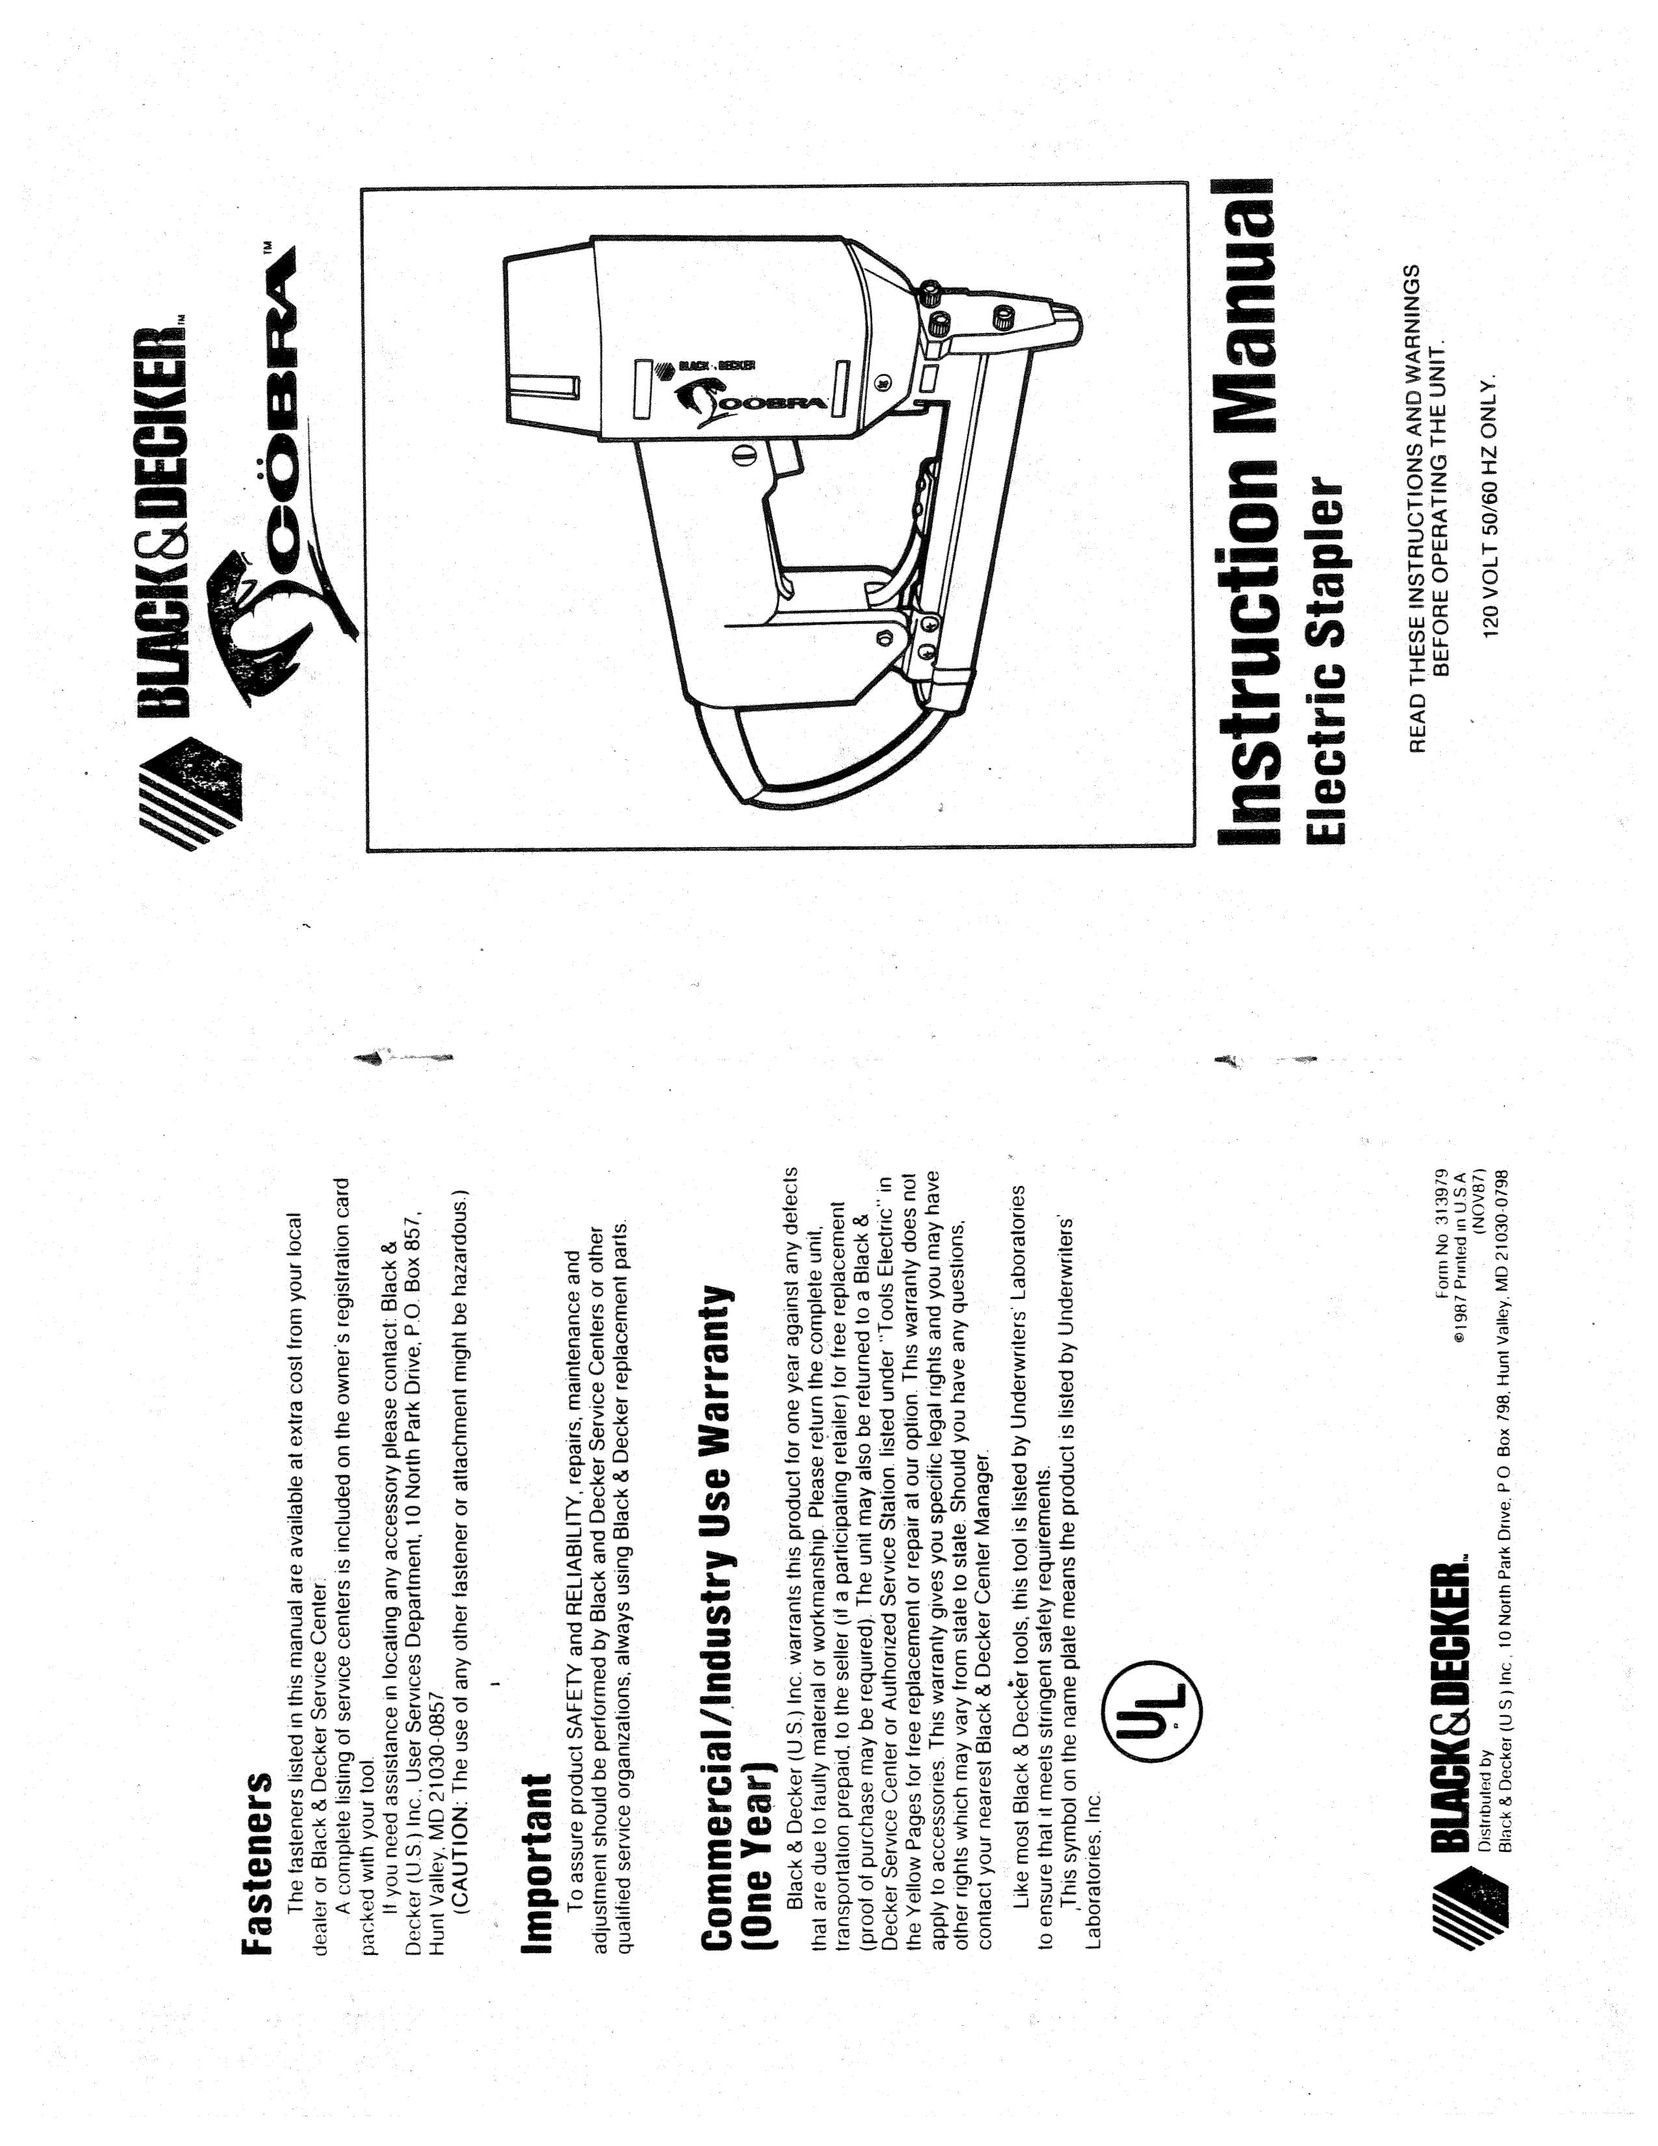 Black & Decker Cobra Staple Gun User Manual